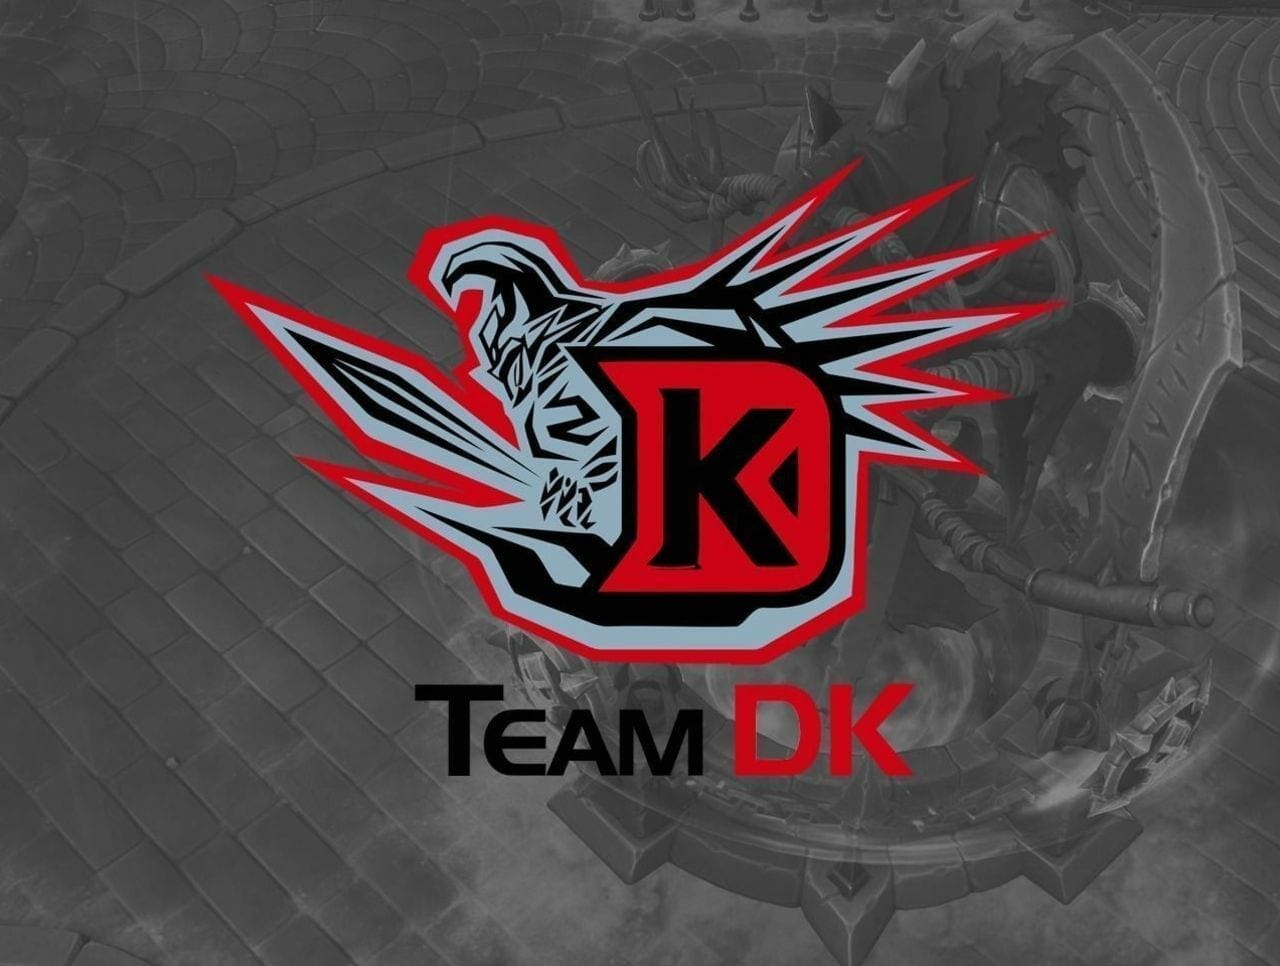 Team DK logo